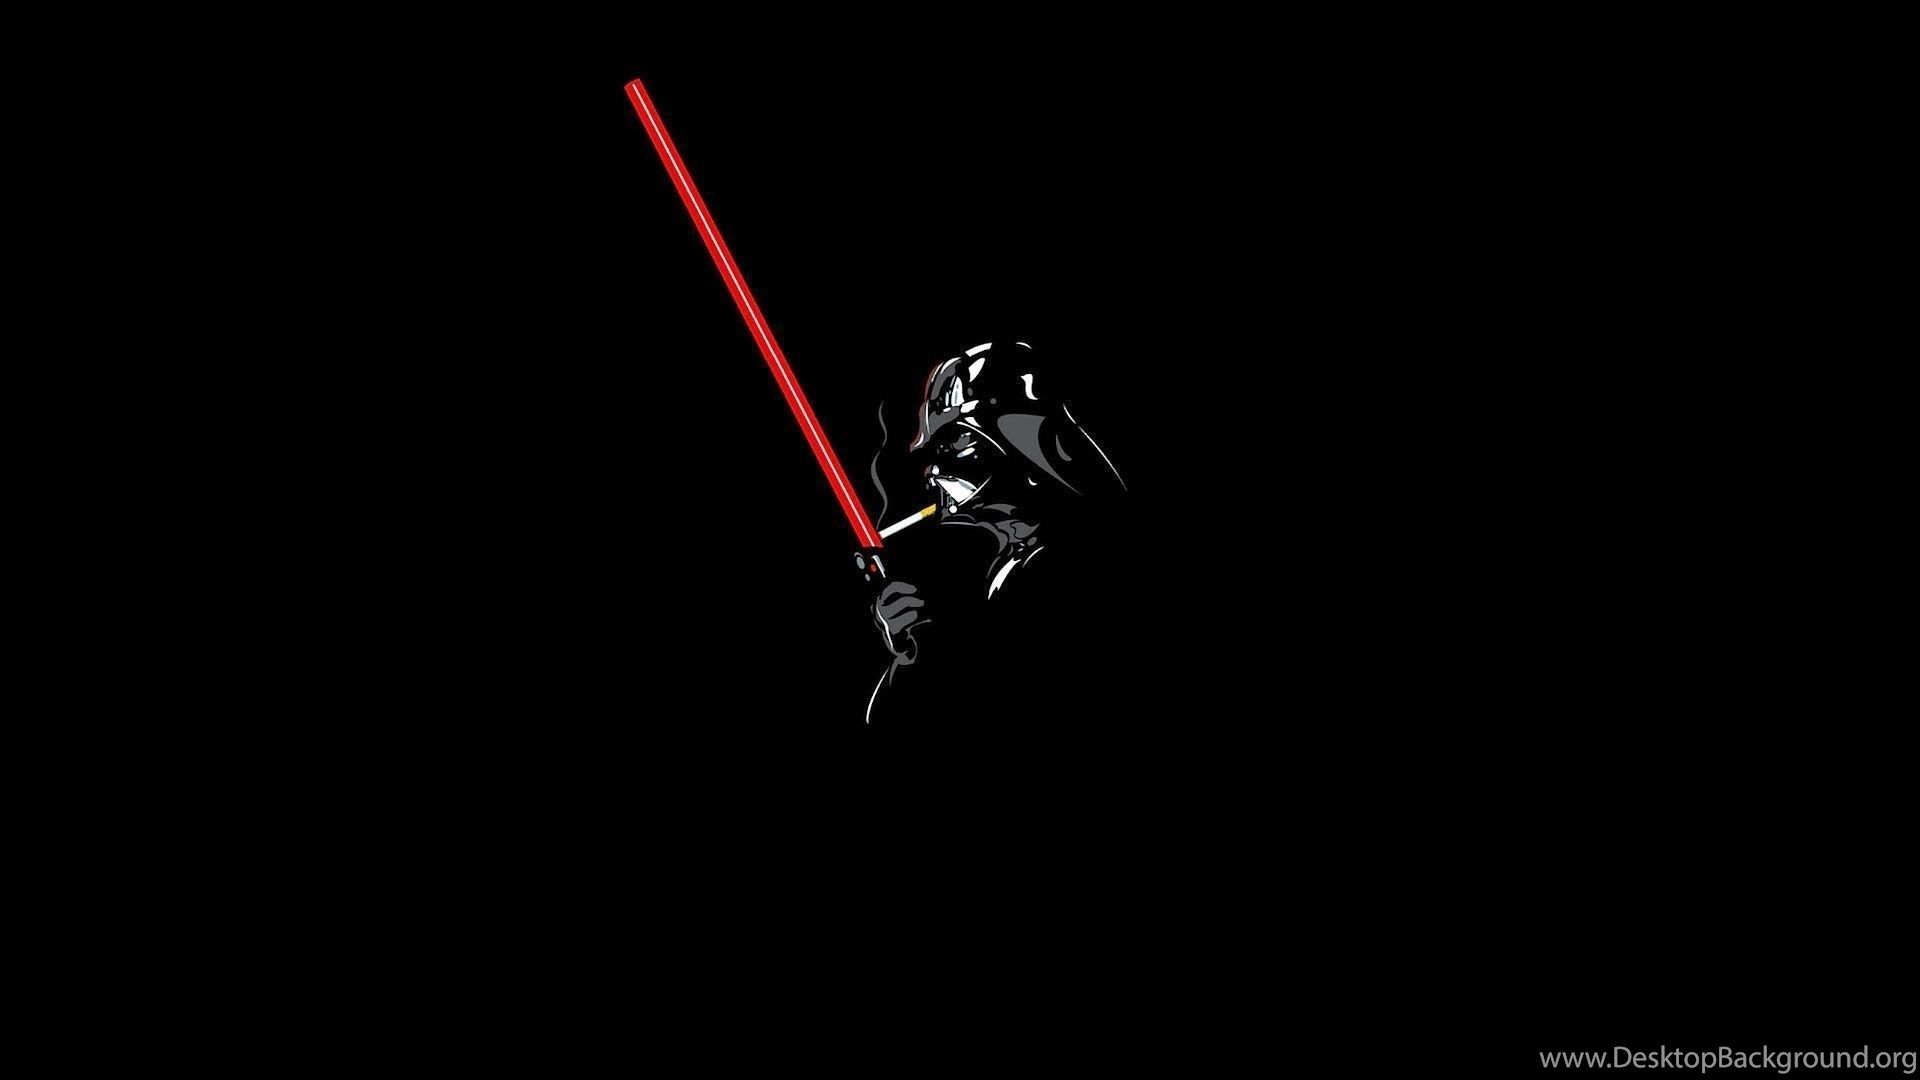 HD Quality Star Wars Darth Vader Wallpaper 19 Movies SiWallpaper. Desktop Background